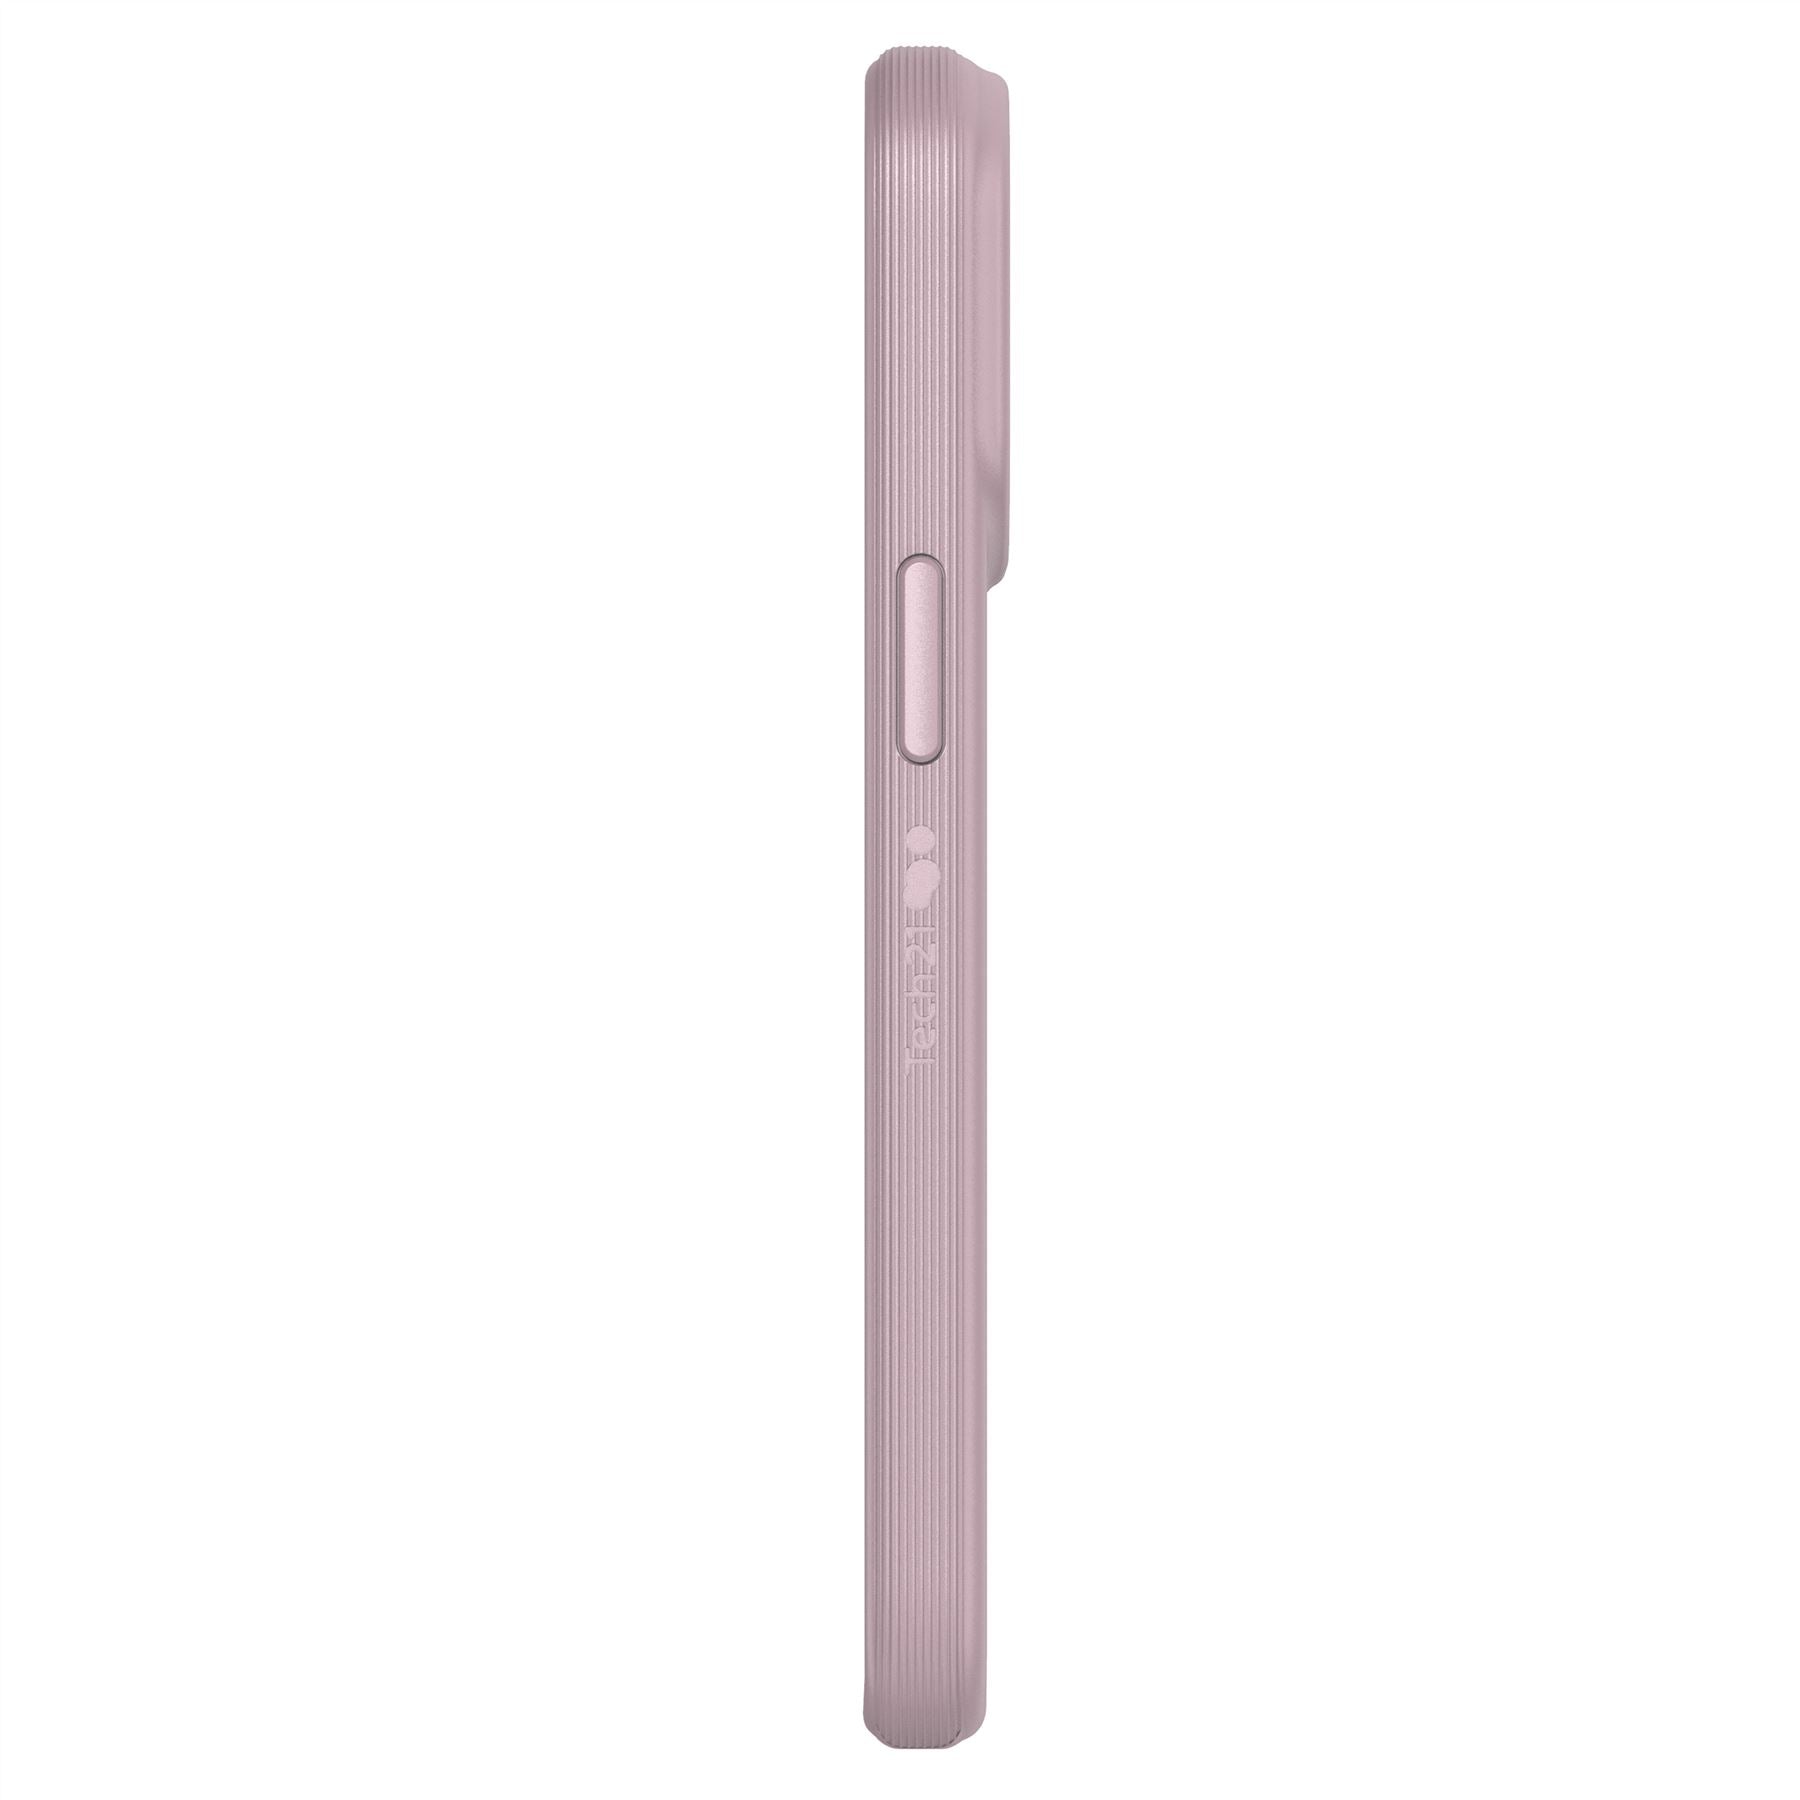 Evo Lite - Apple iPhone 13 Pro Case - Dusty Pink